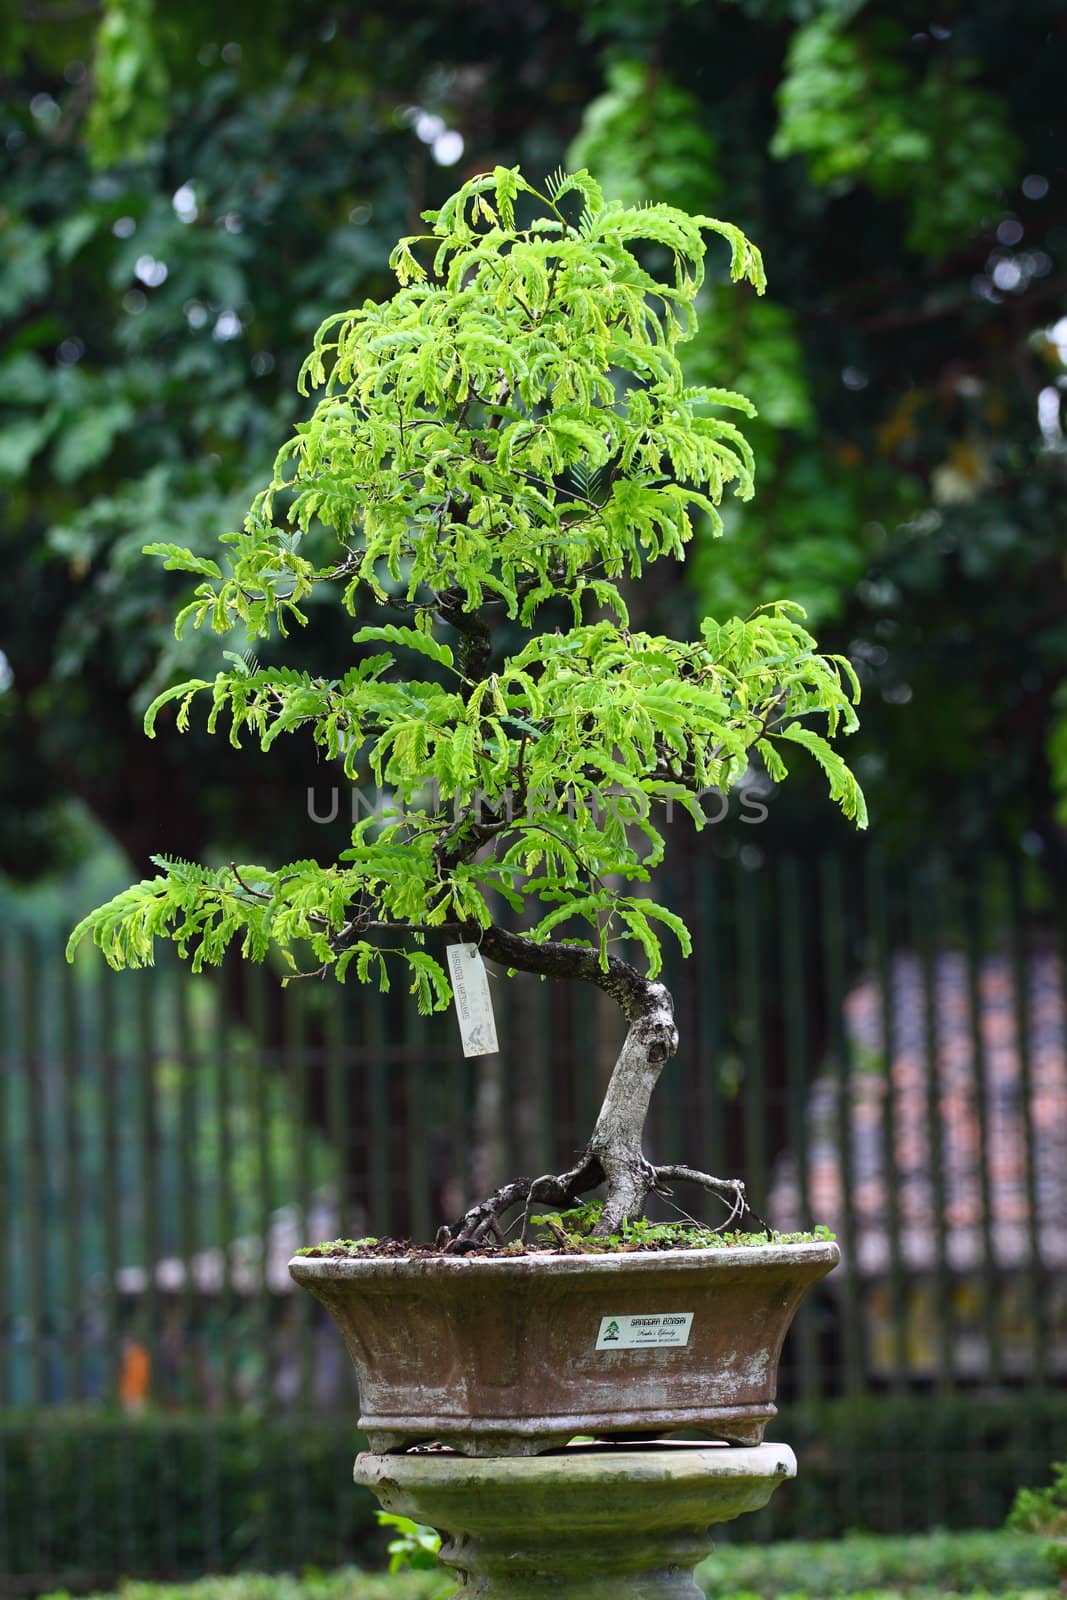 bonsai on green grass background